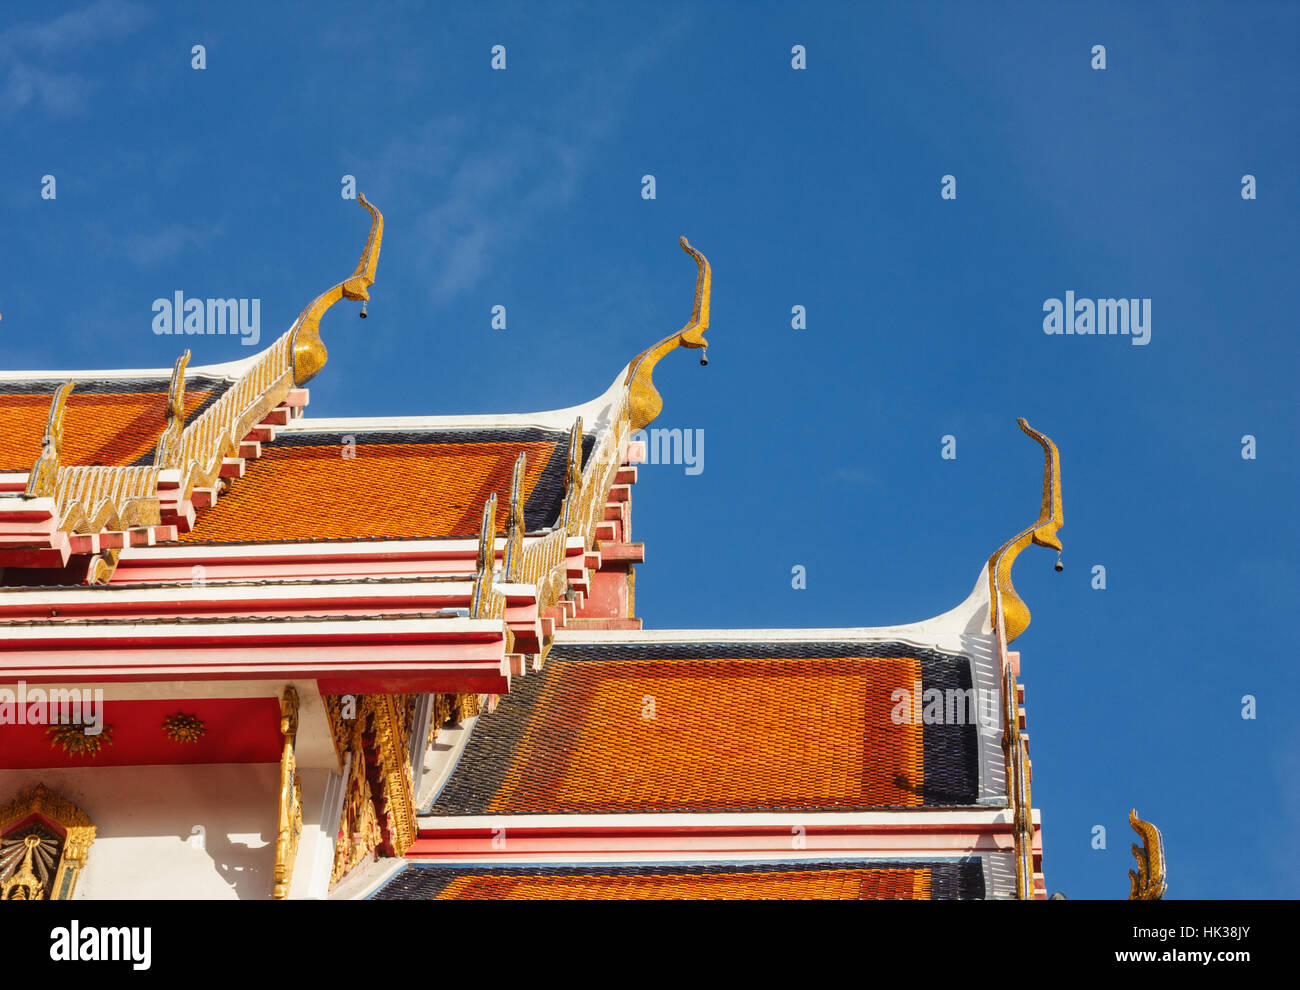 Dach der alten Wat Samphanthawong Tempel, der im Sampheng oder Samphanthawong District von Bangkoks Chinatown entfernt. Bangkok, Thailand. Stockfoto